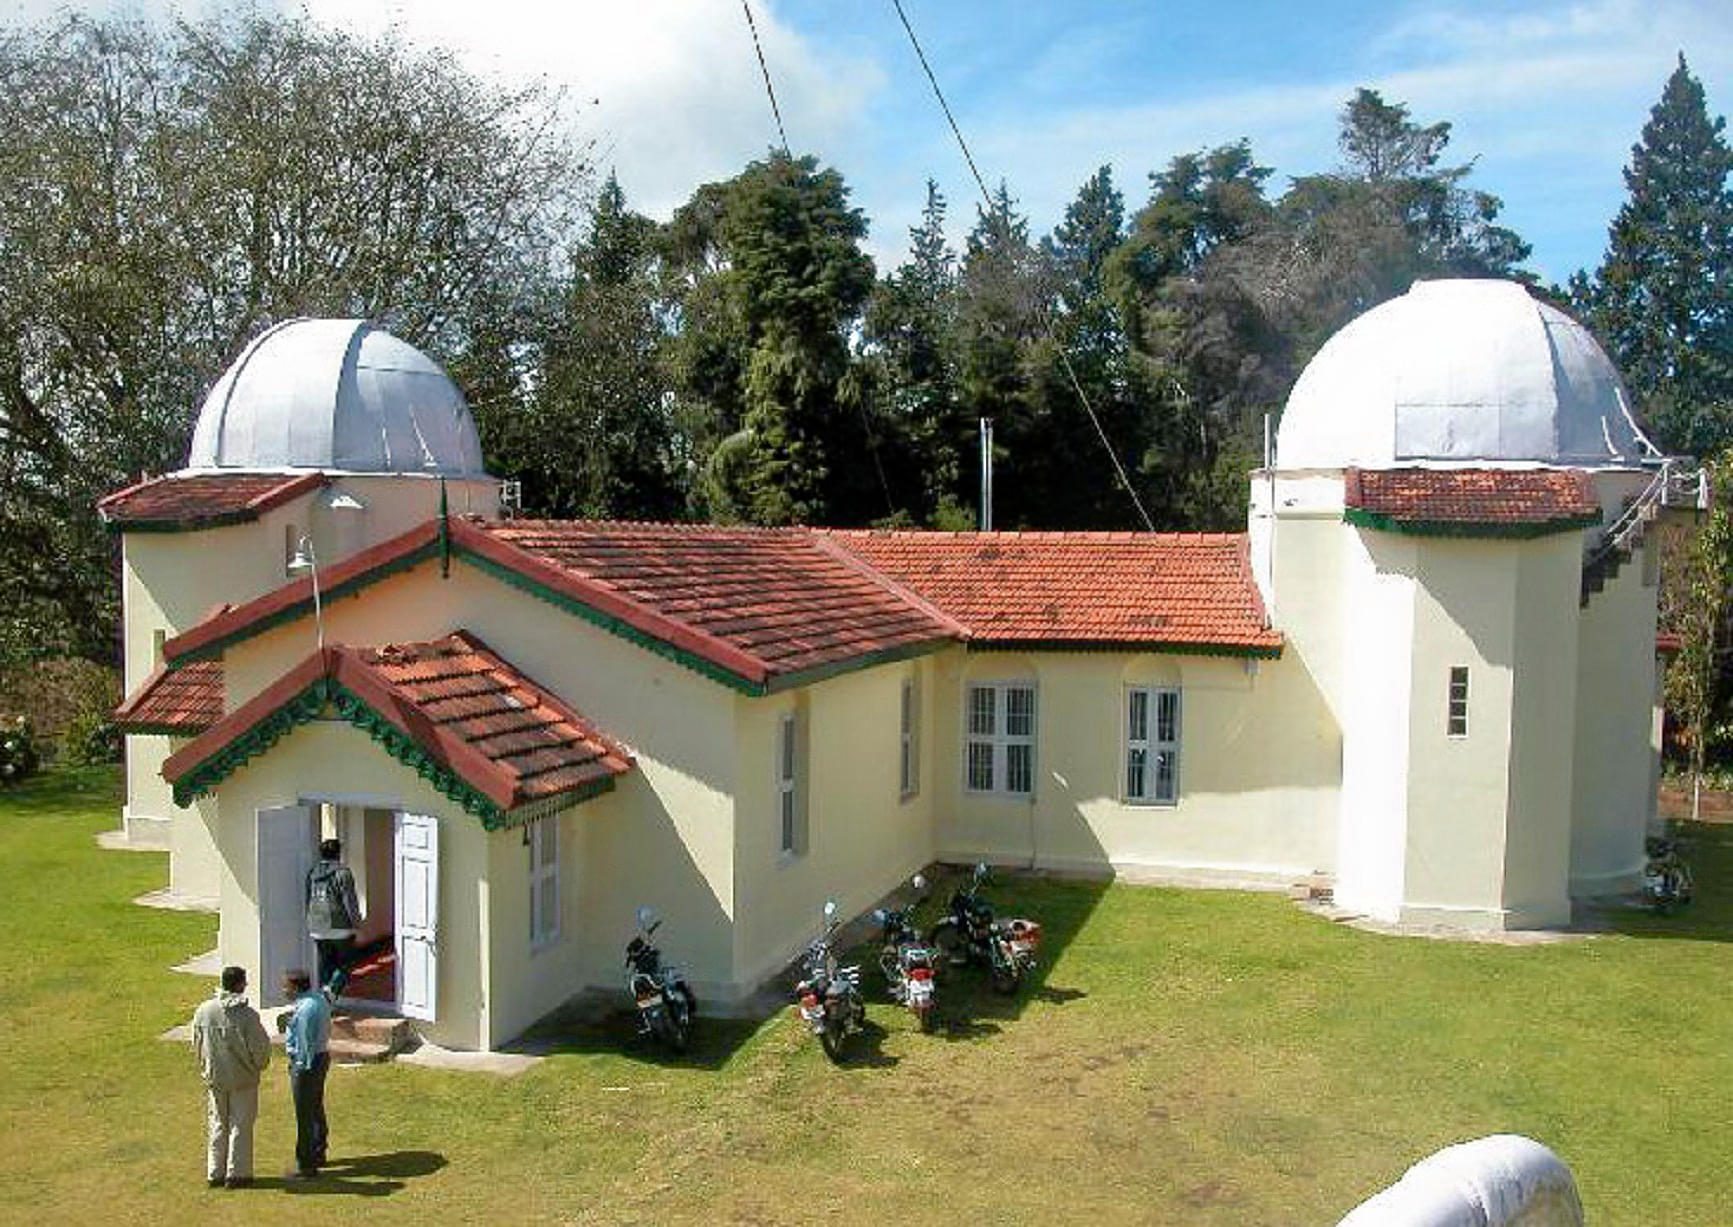 Kodaikanal Solar Observatory Overview